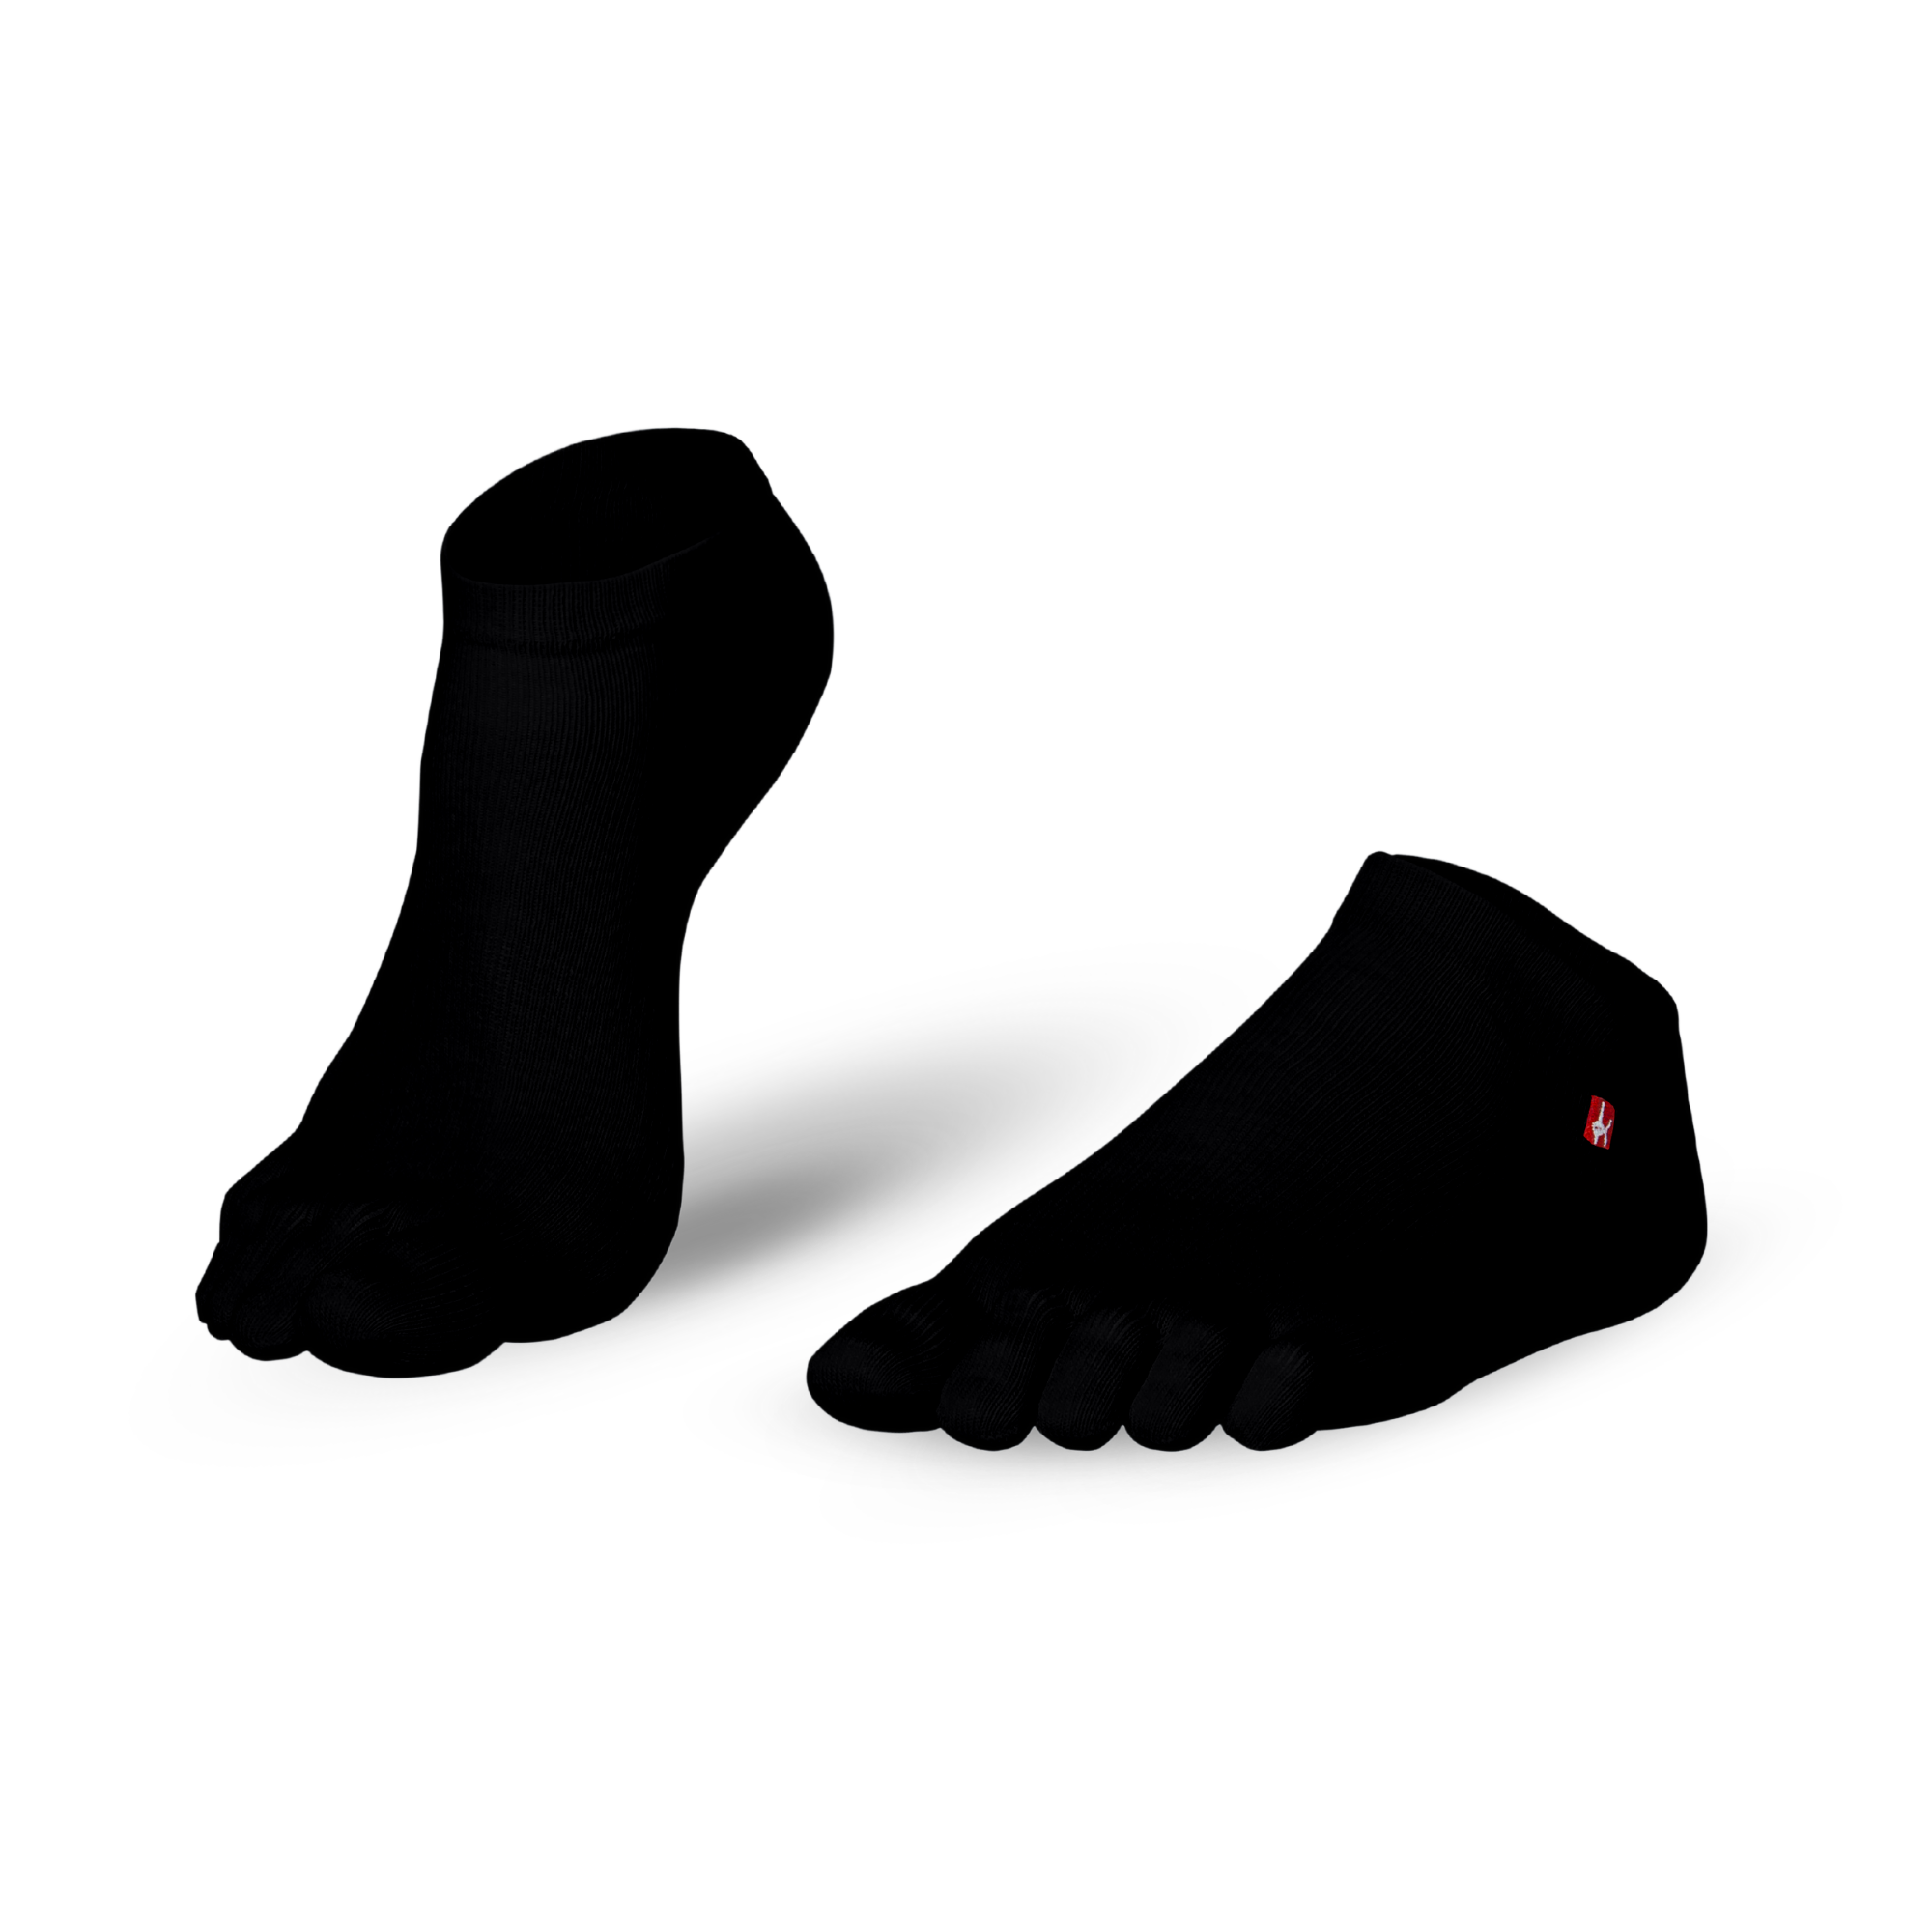 Knitido Track & Trail Ultralite, Sports socks